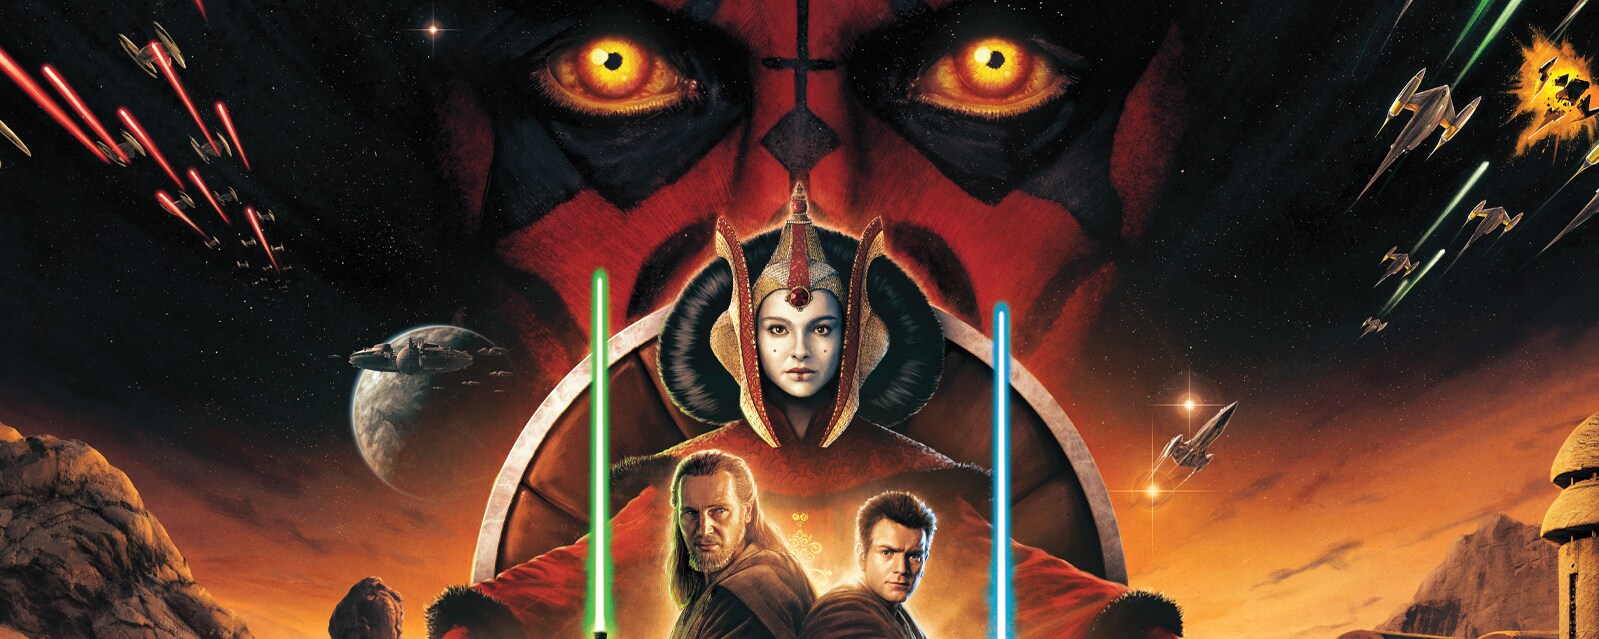 Star Wars: The Phantom Menace poster by Matt Ferguson, featuring Darth Maul, Obi-Wan Kenobi and Qui-Jinn, Padme Amidala, and more.